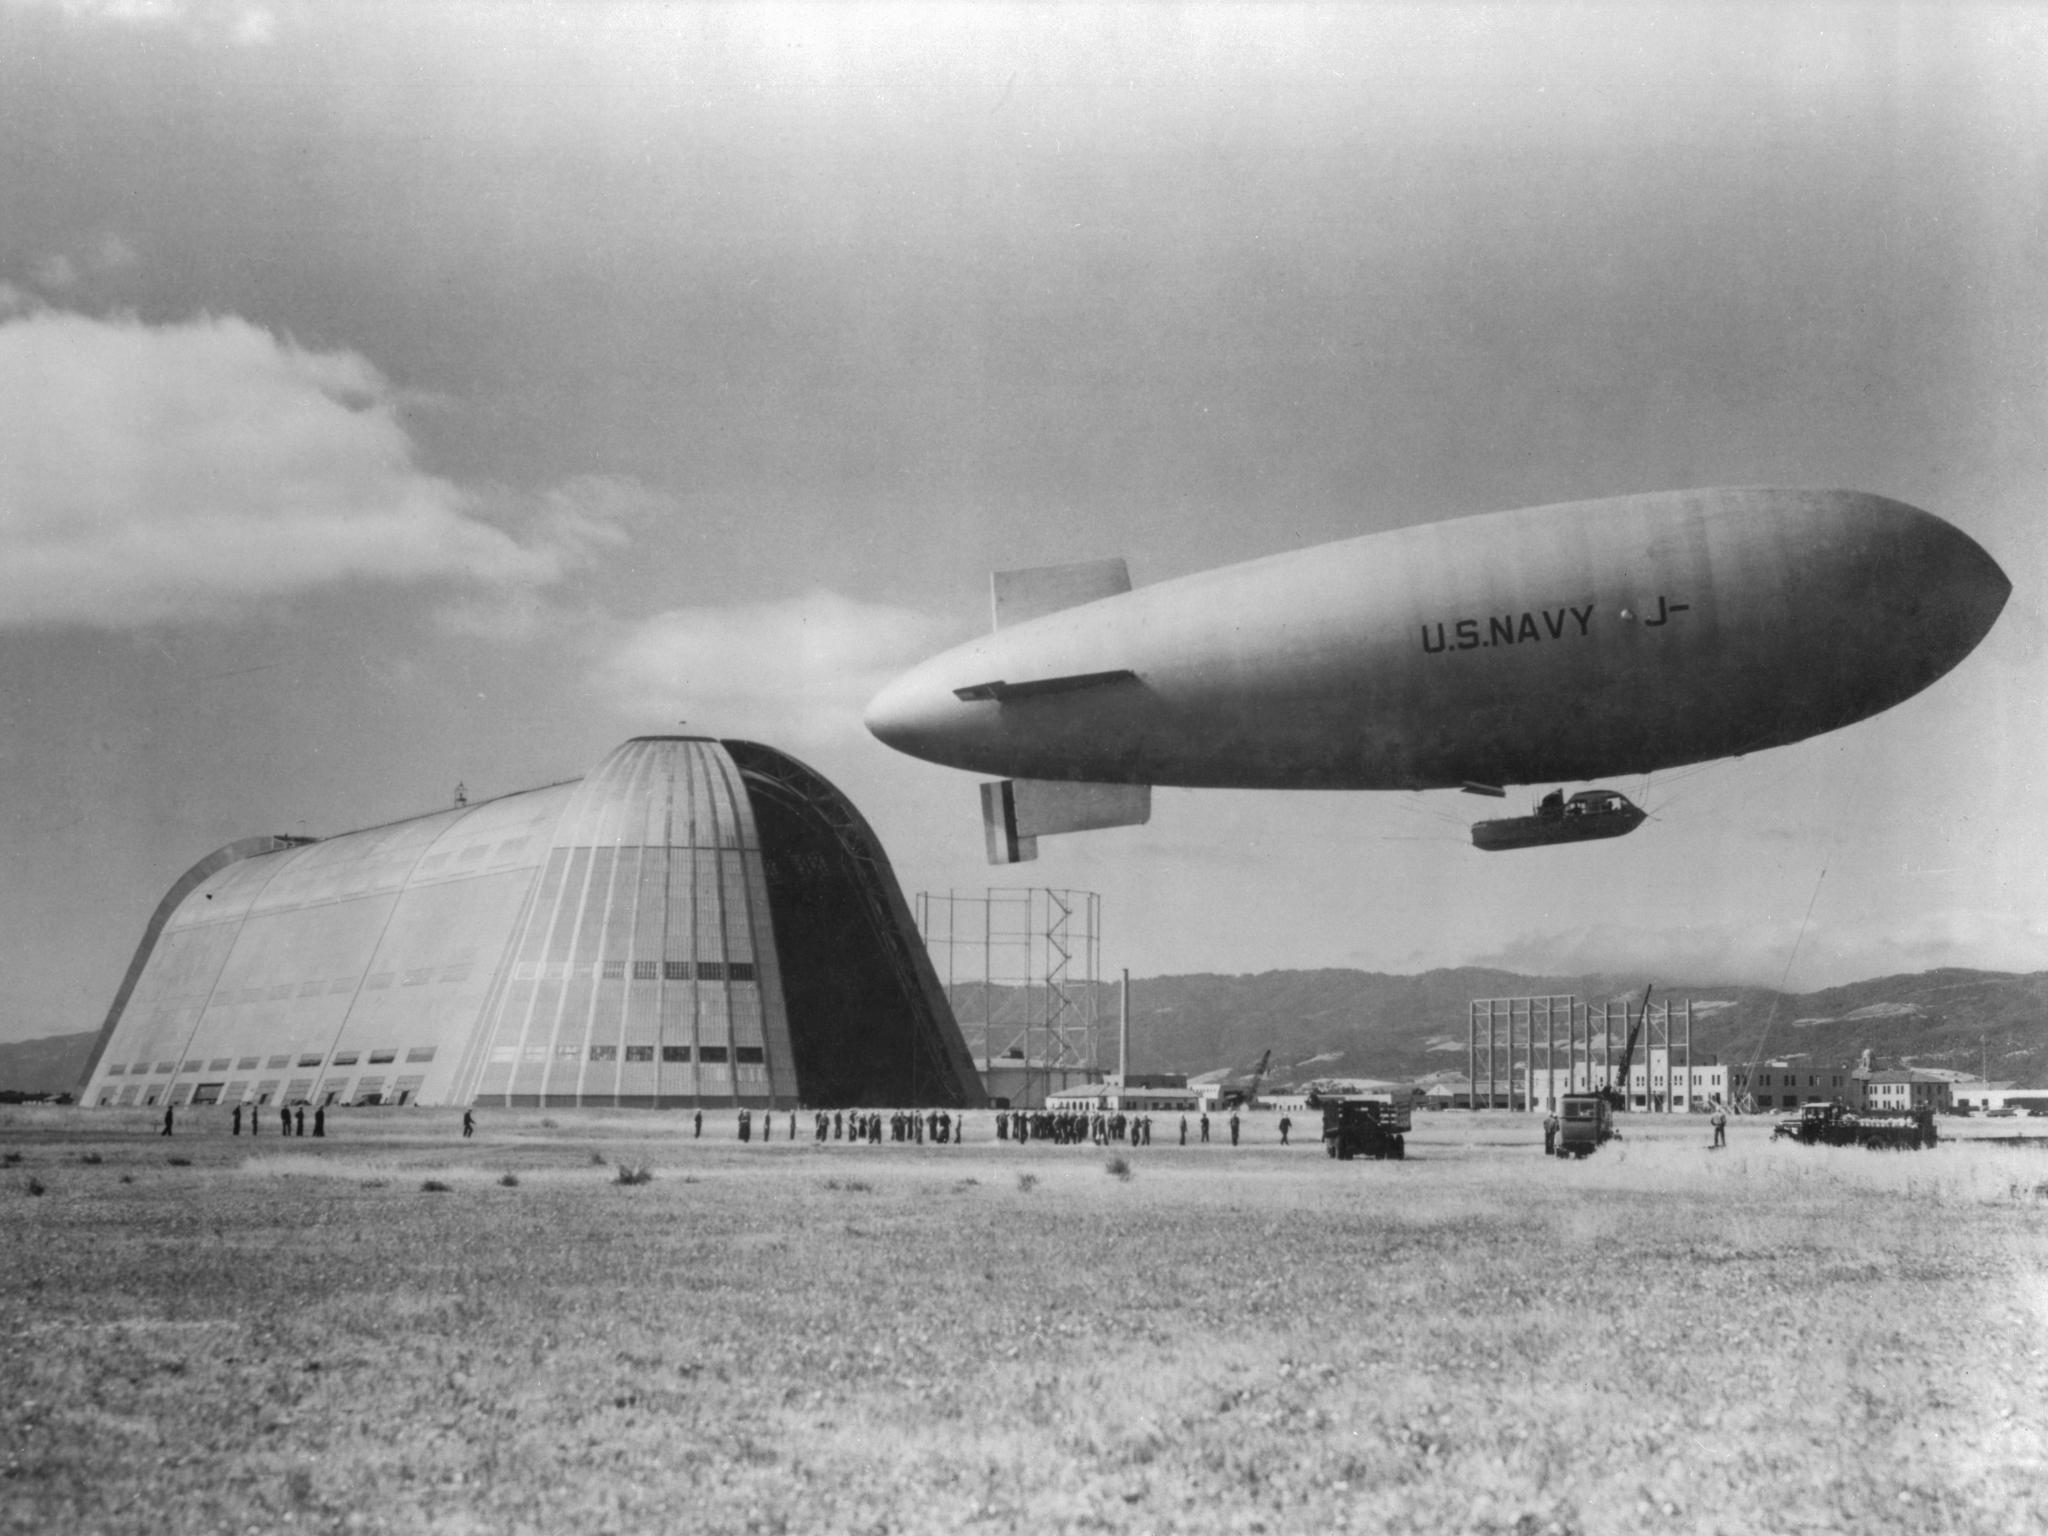 U.S. Navy J-4 airship with Hangar One, circa 1934. 